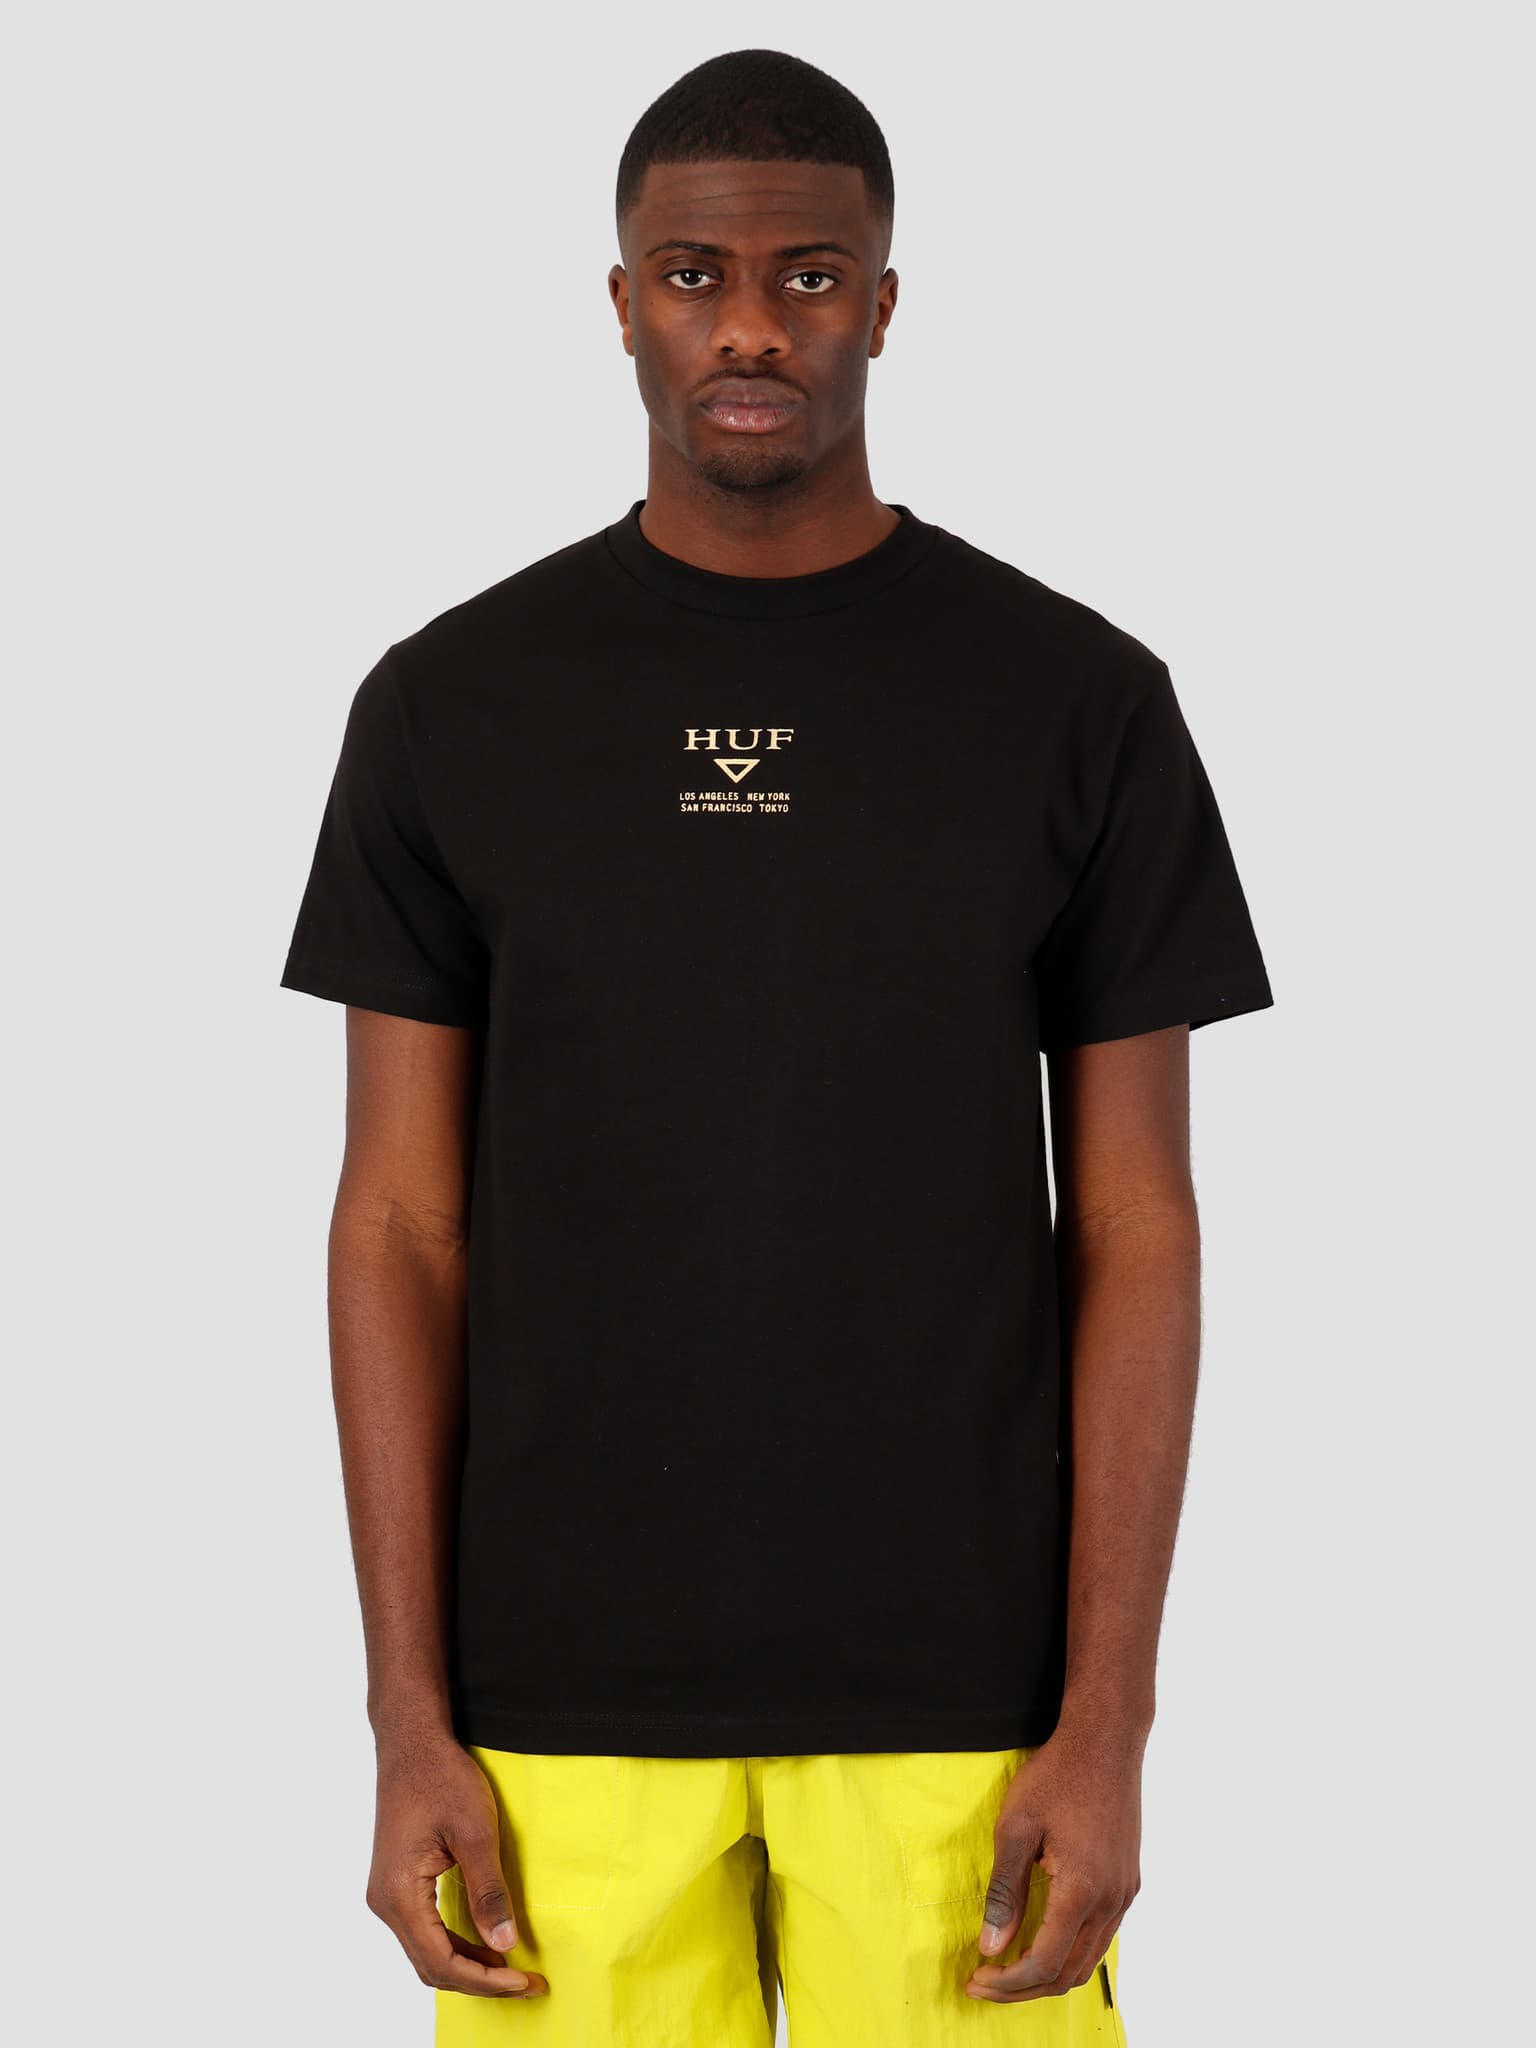 Hufex T-Shirt Black TS01022